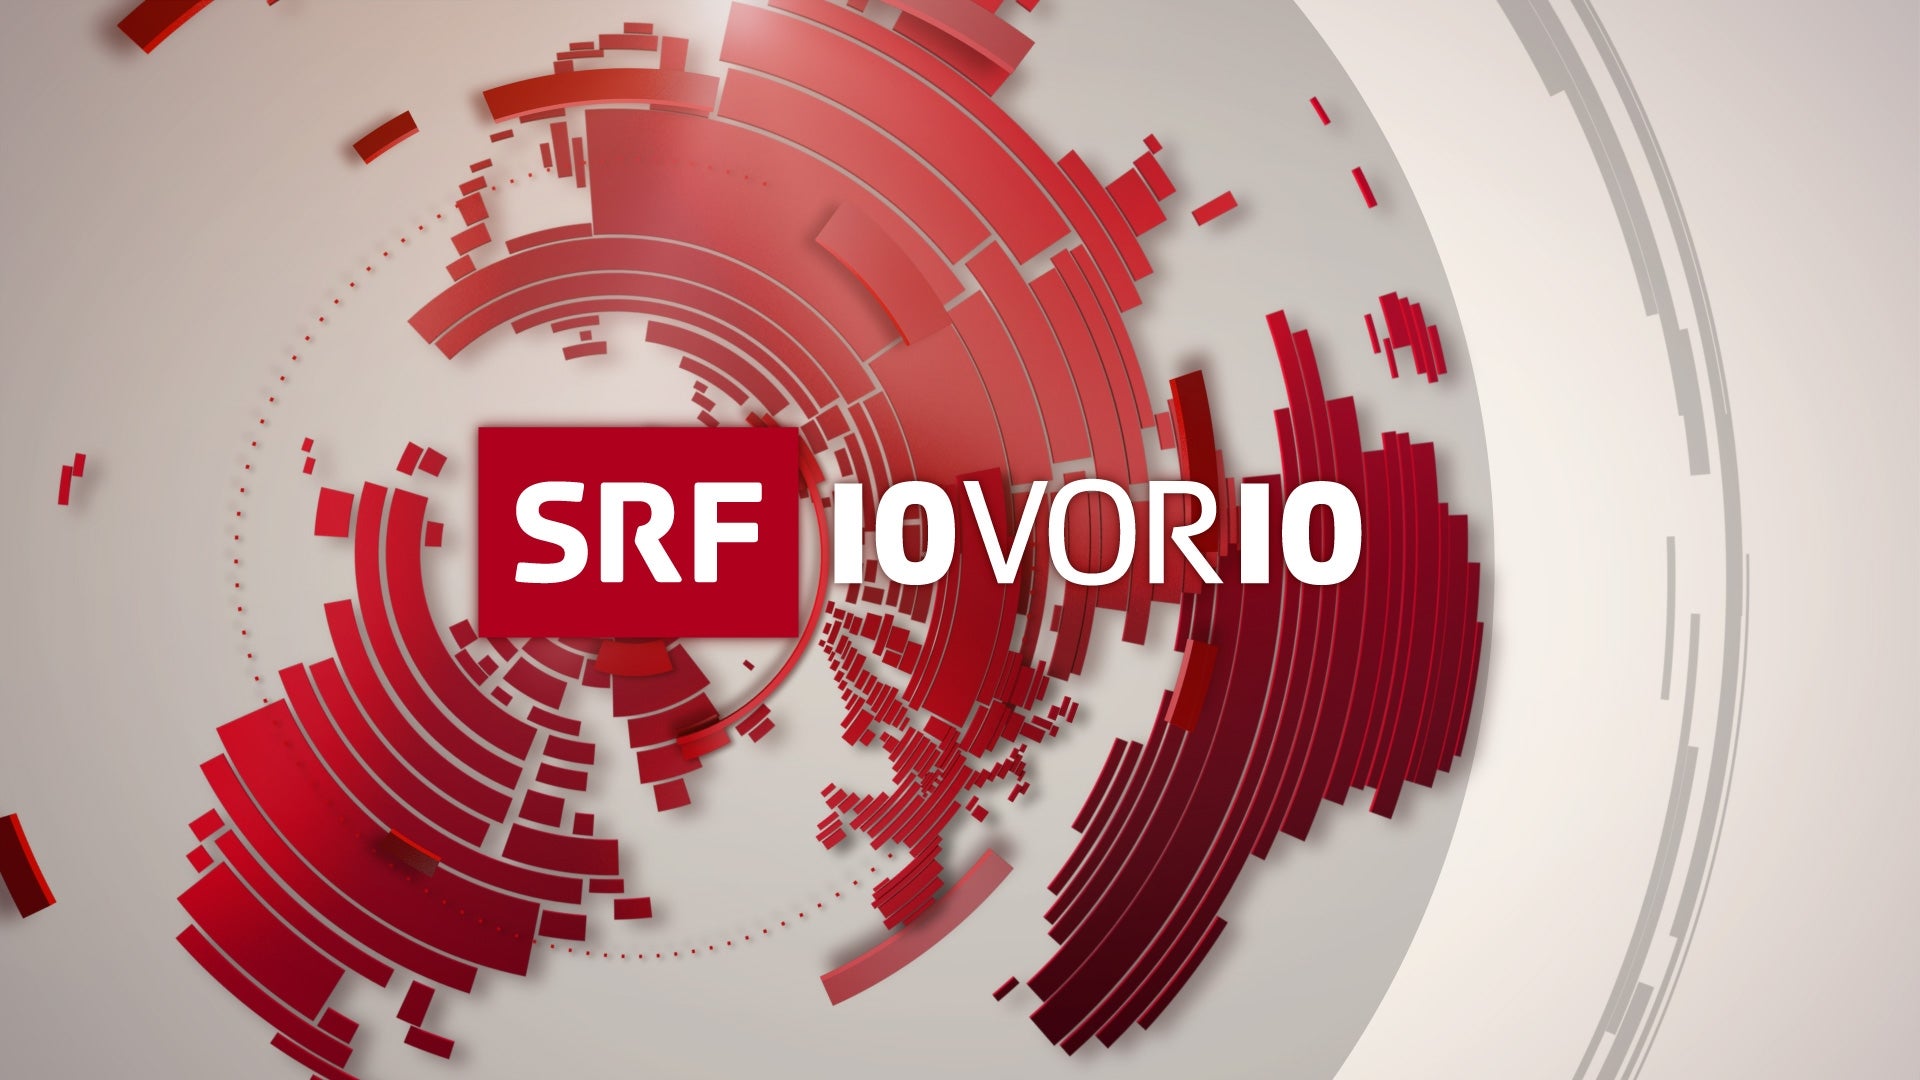 TV ratings for 10vor10 in Chile. SRF 1 TV series